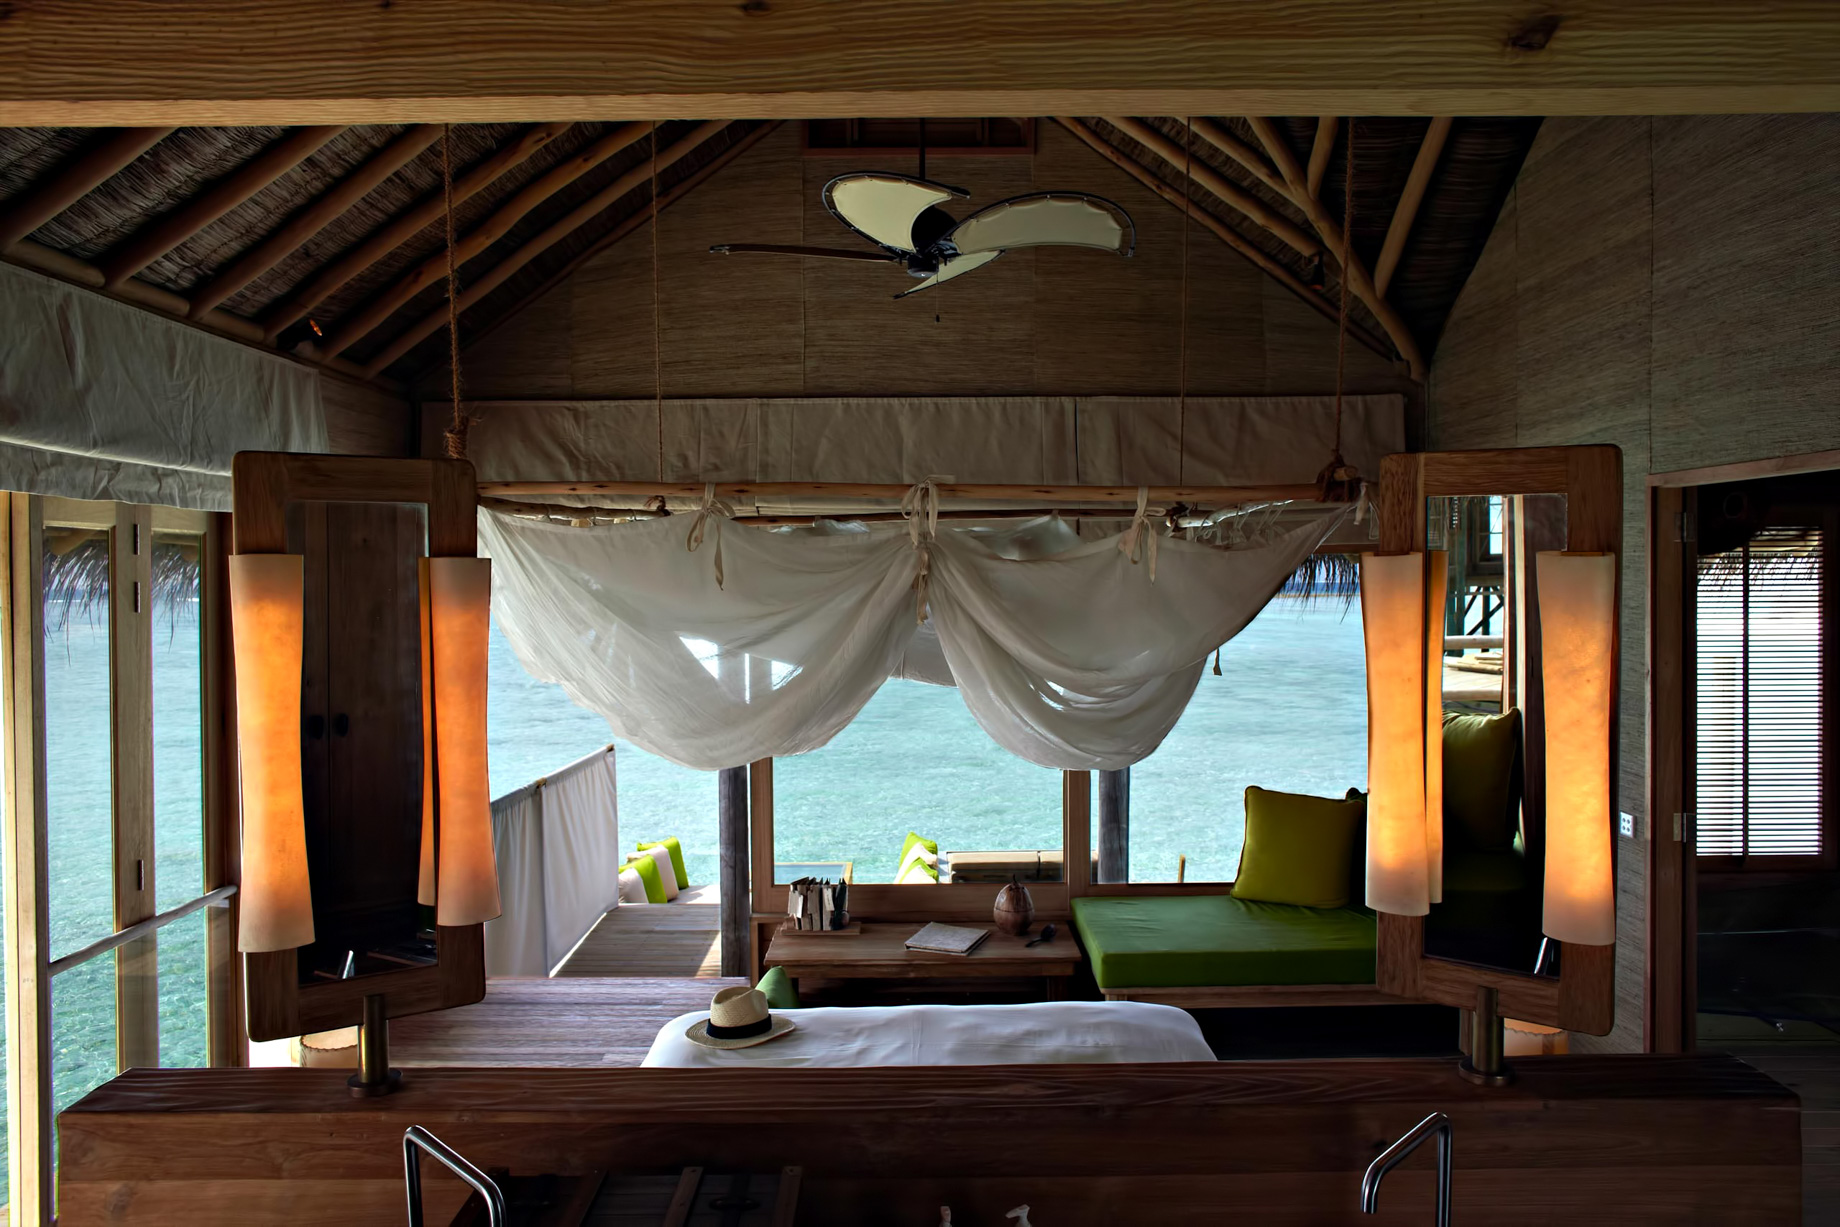 Six Senses Laamu Resort – Laamu Atoll, Maldives – Overwater Villa Bedroom View